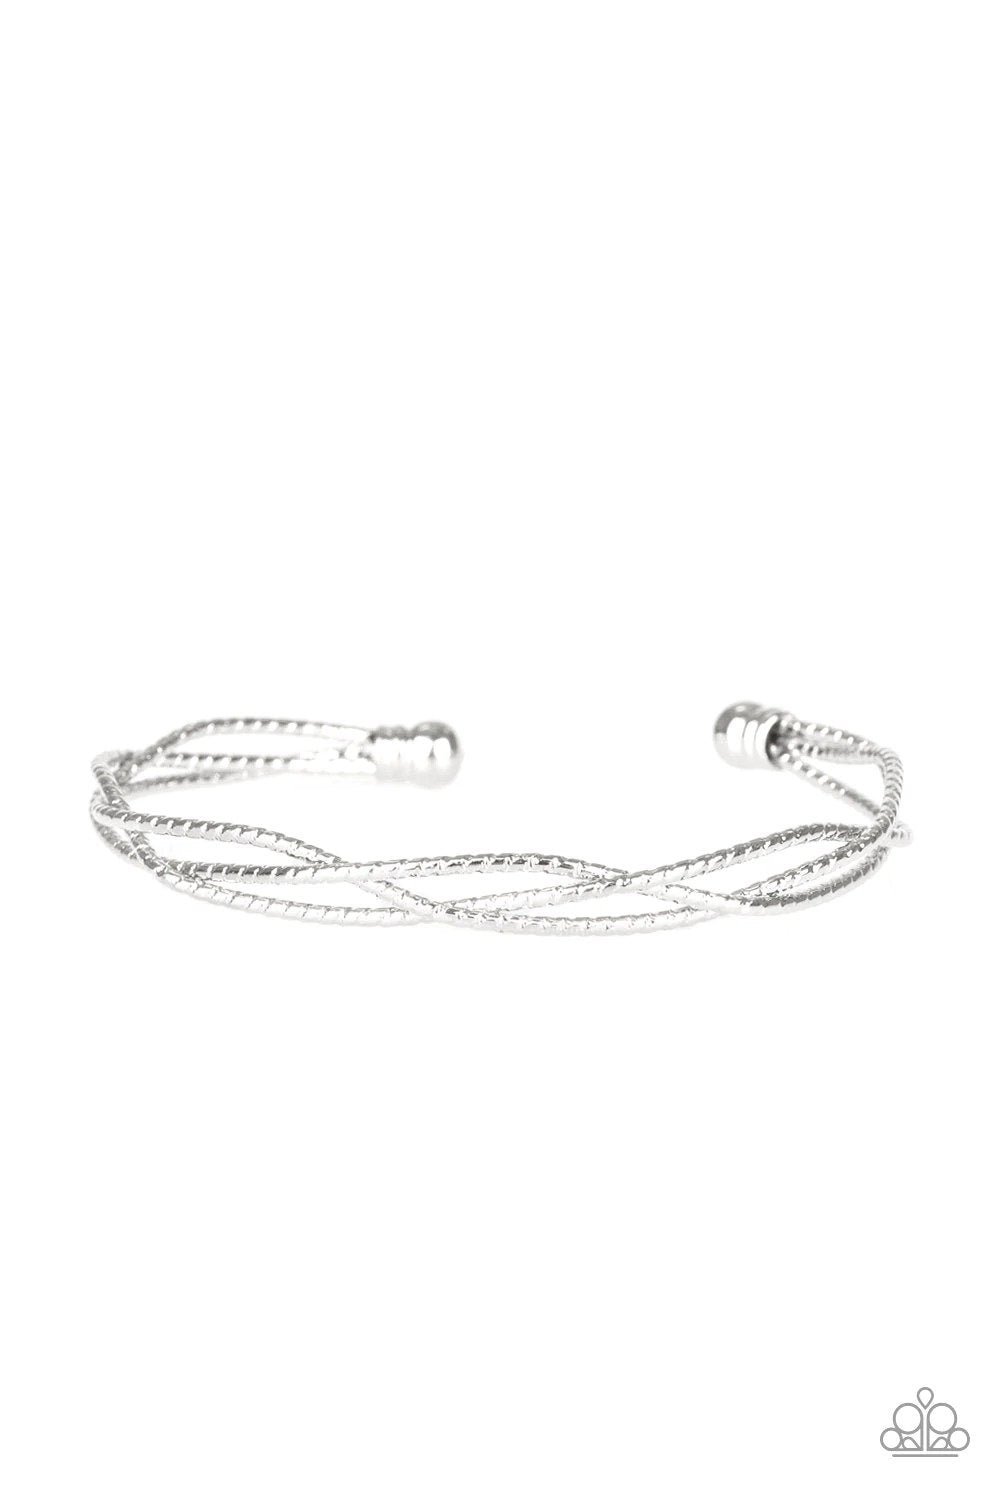 Twist of the Wrist Silver Cuff Bracelet - Paparazzi Accessories- lightbox - CarasShop.com - $5 Jewelry by Cara Jewels